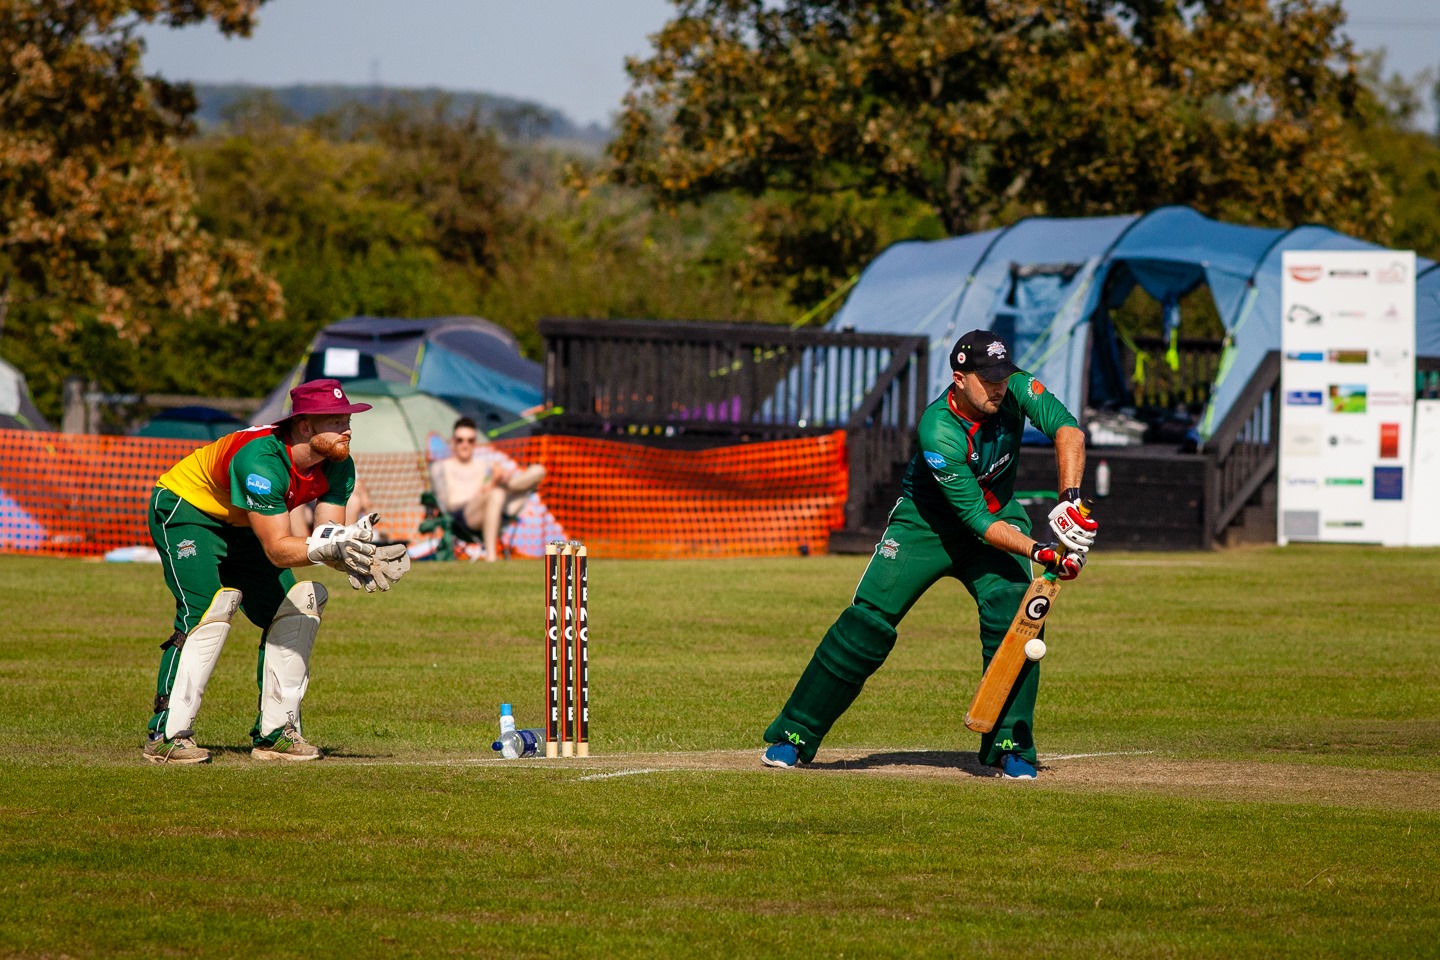 Blunham Cricket Club play through blazing sunshine in their world record attempt